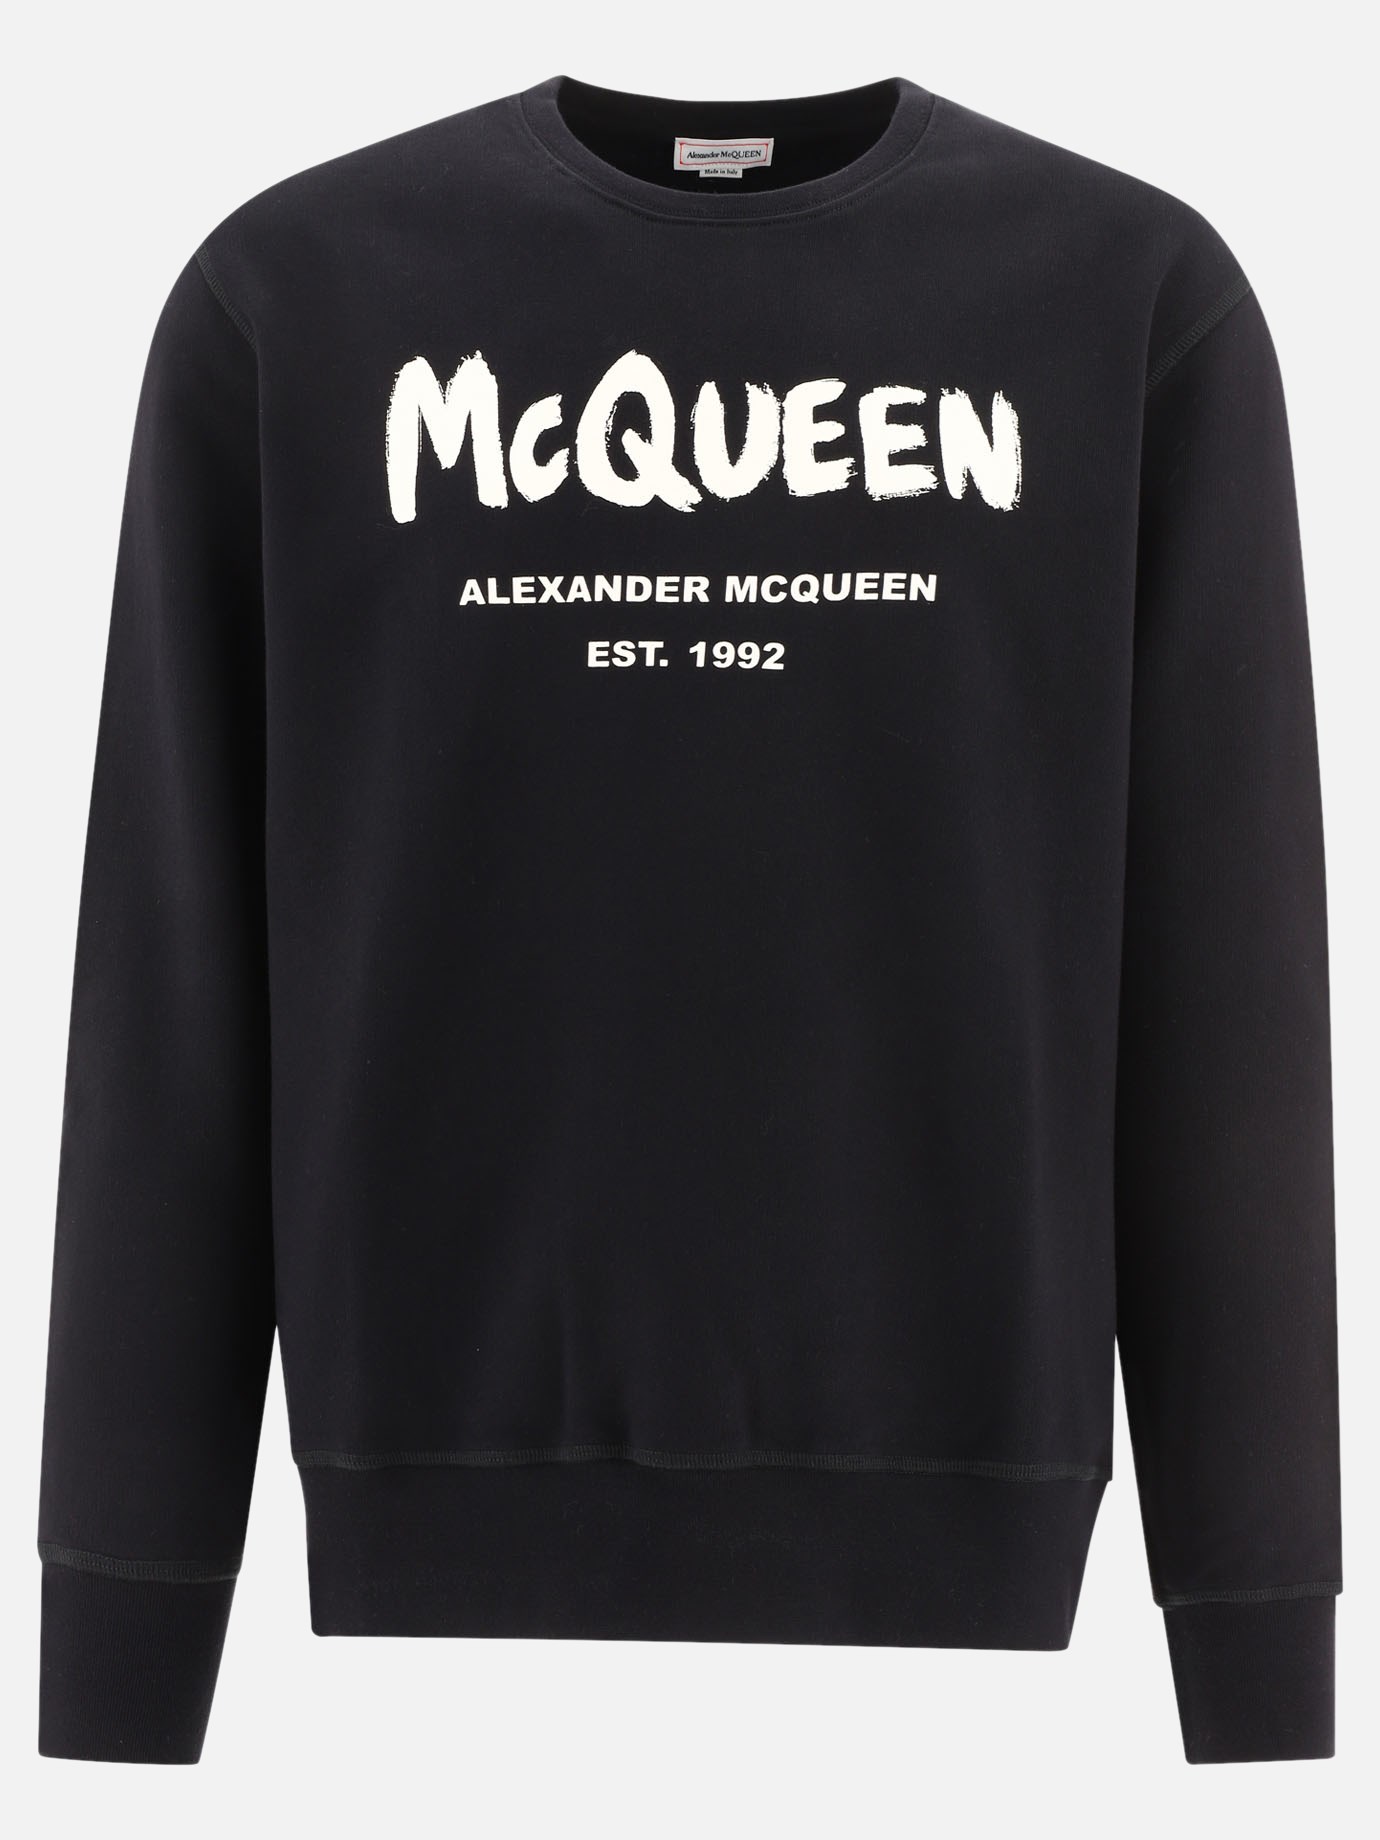  Graffiti  sweatshirtby Alexander McQueen - 1